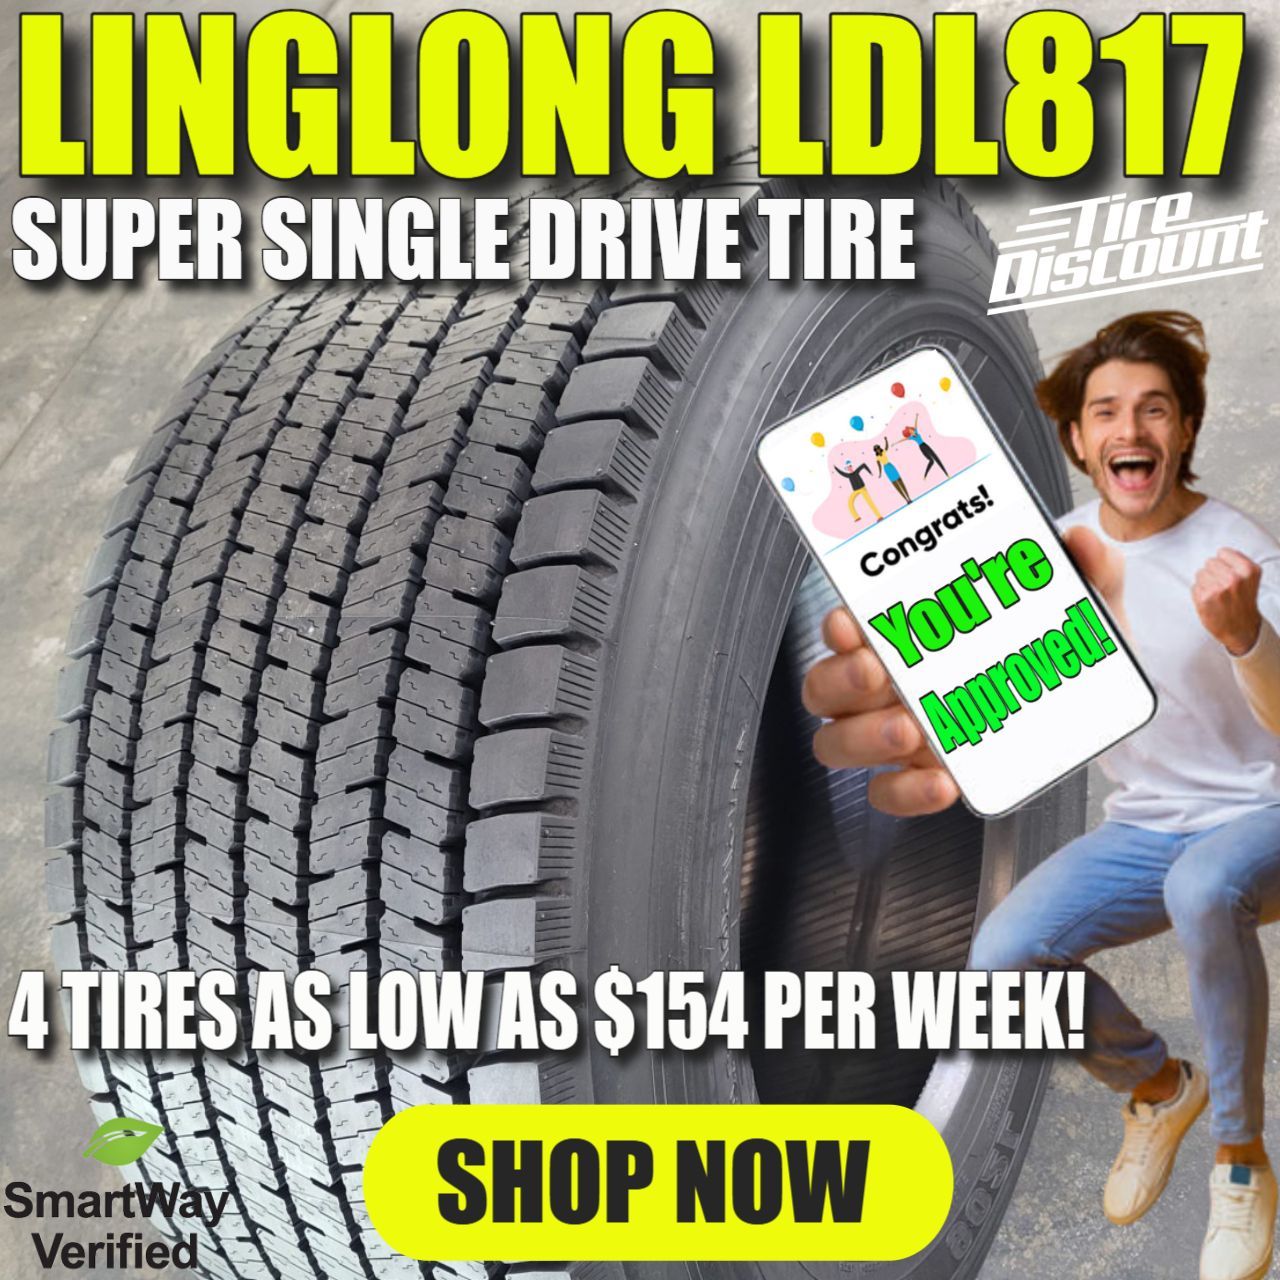 LingLong LDL817